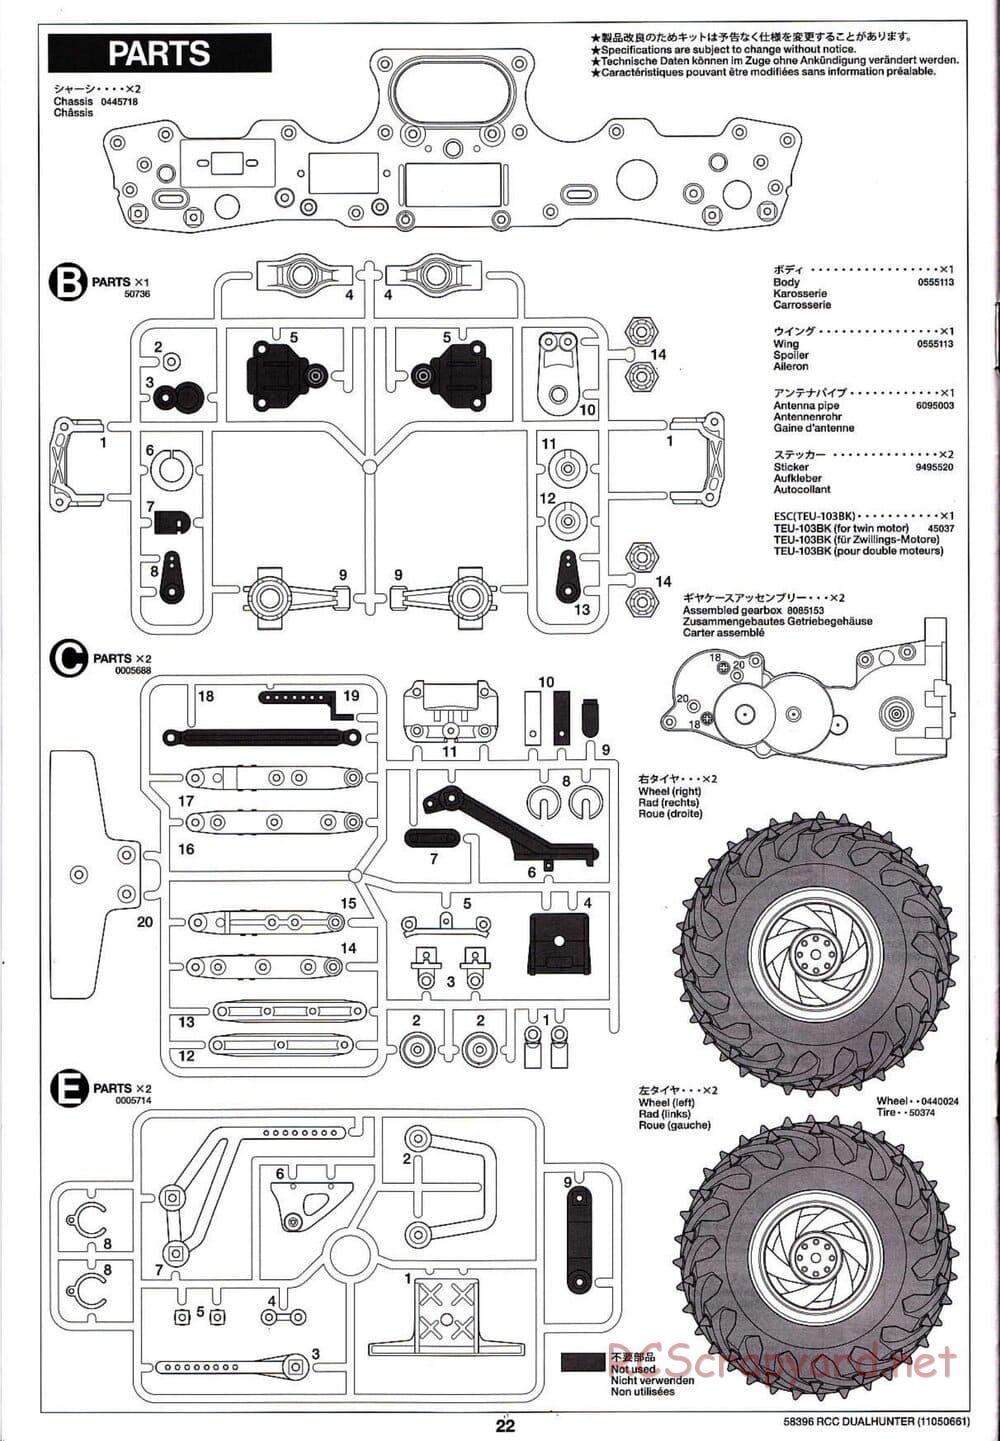 Tamiya - Dualhunter - WR-01 Chassis - Manual - Page 22